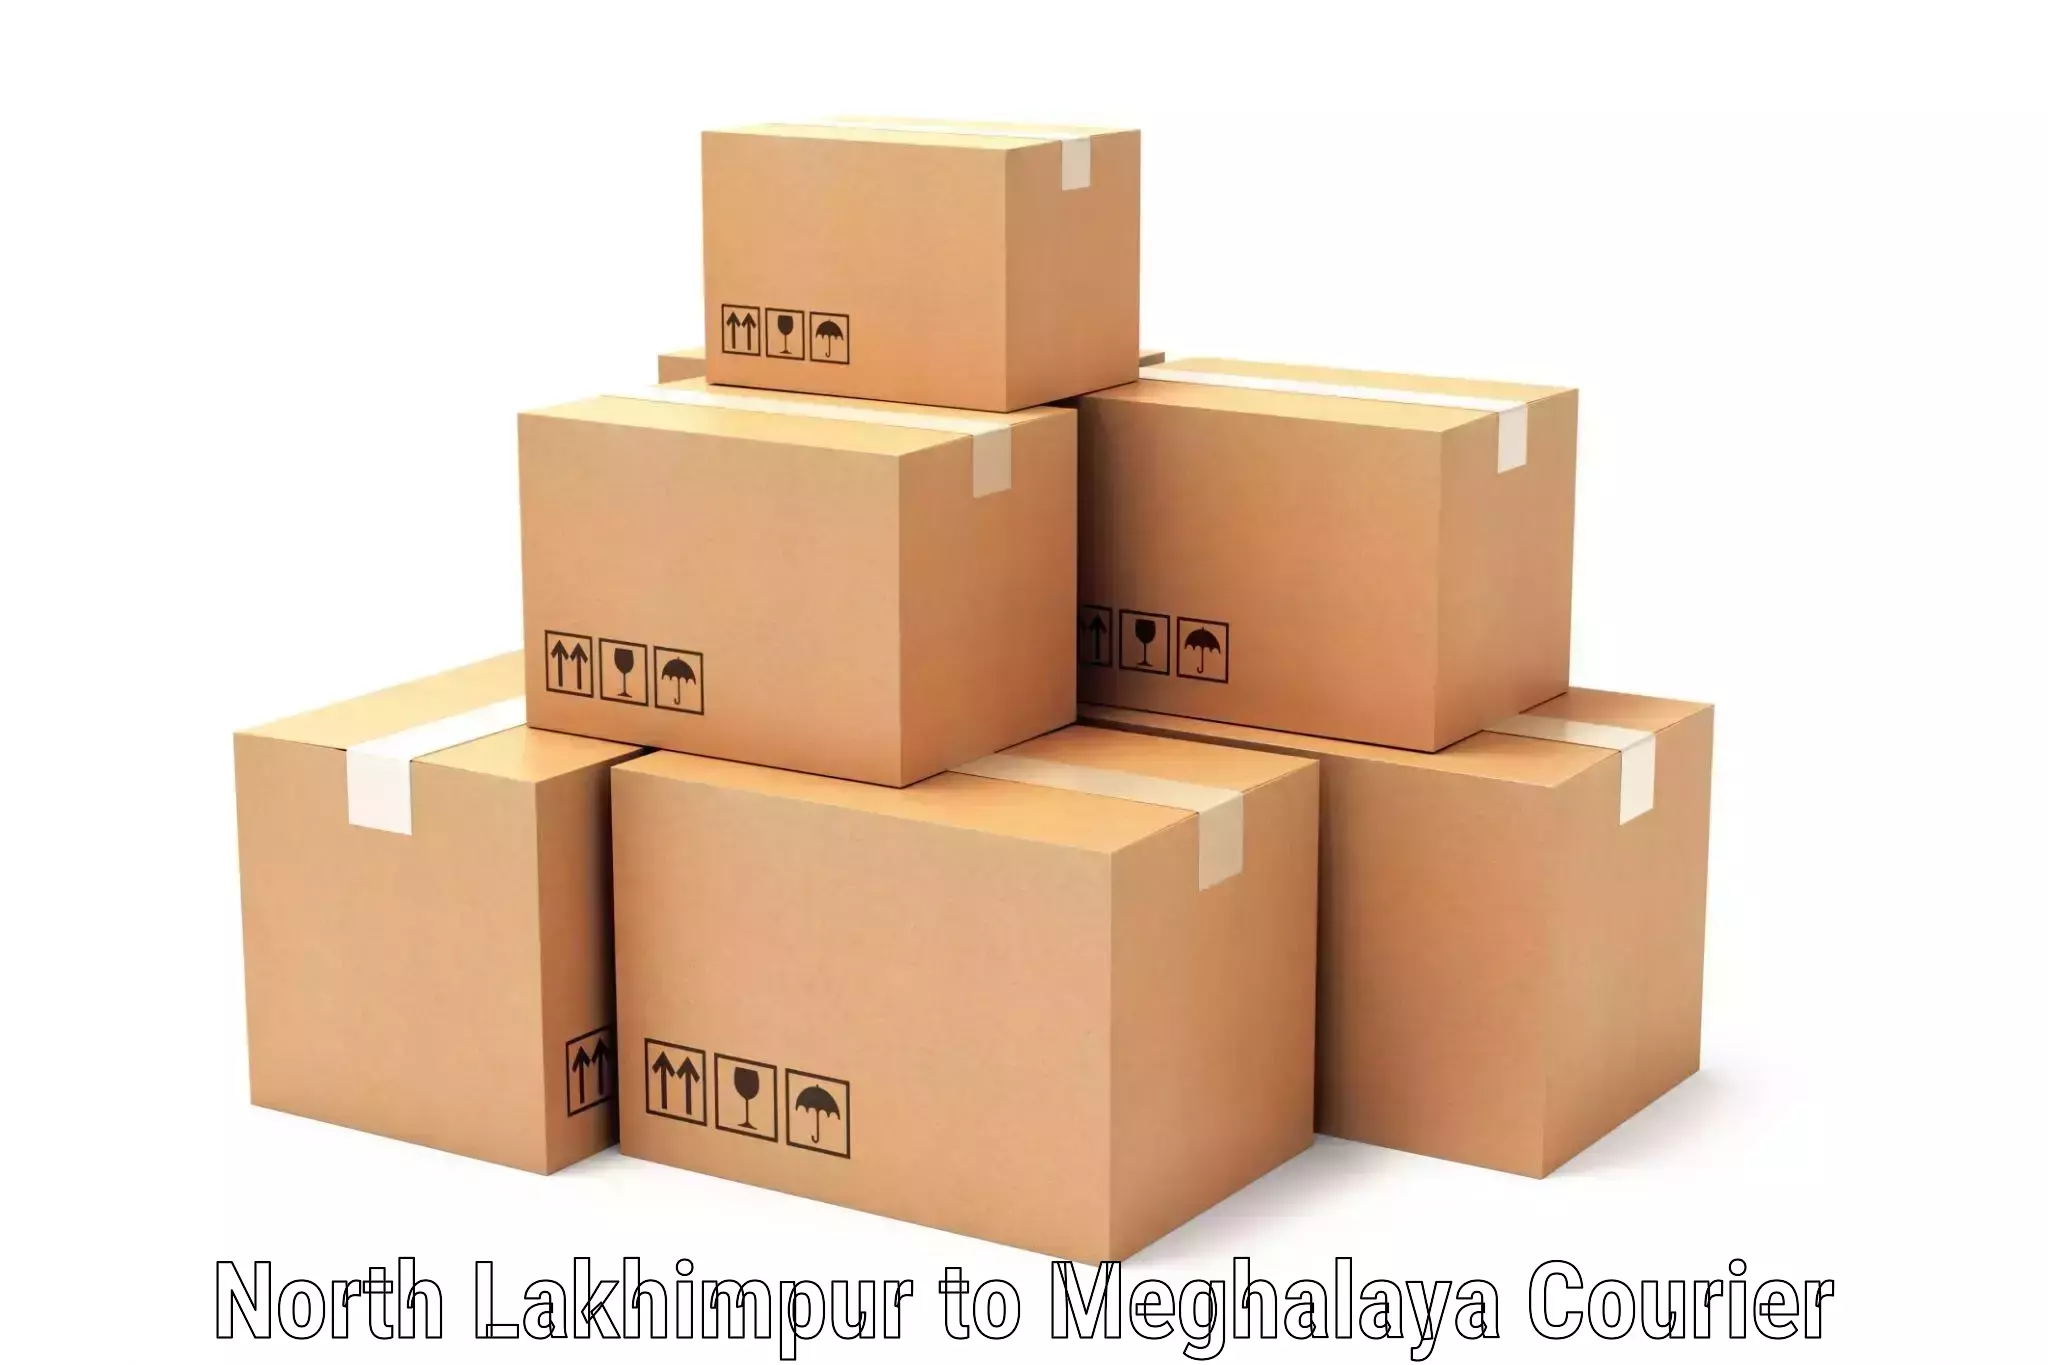 High-capacity parcel service North Lakhimpur to Meghalaya